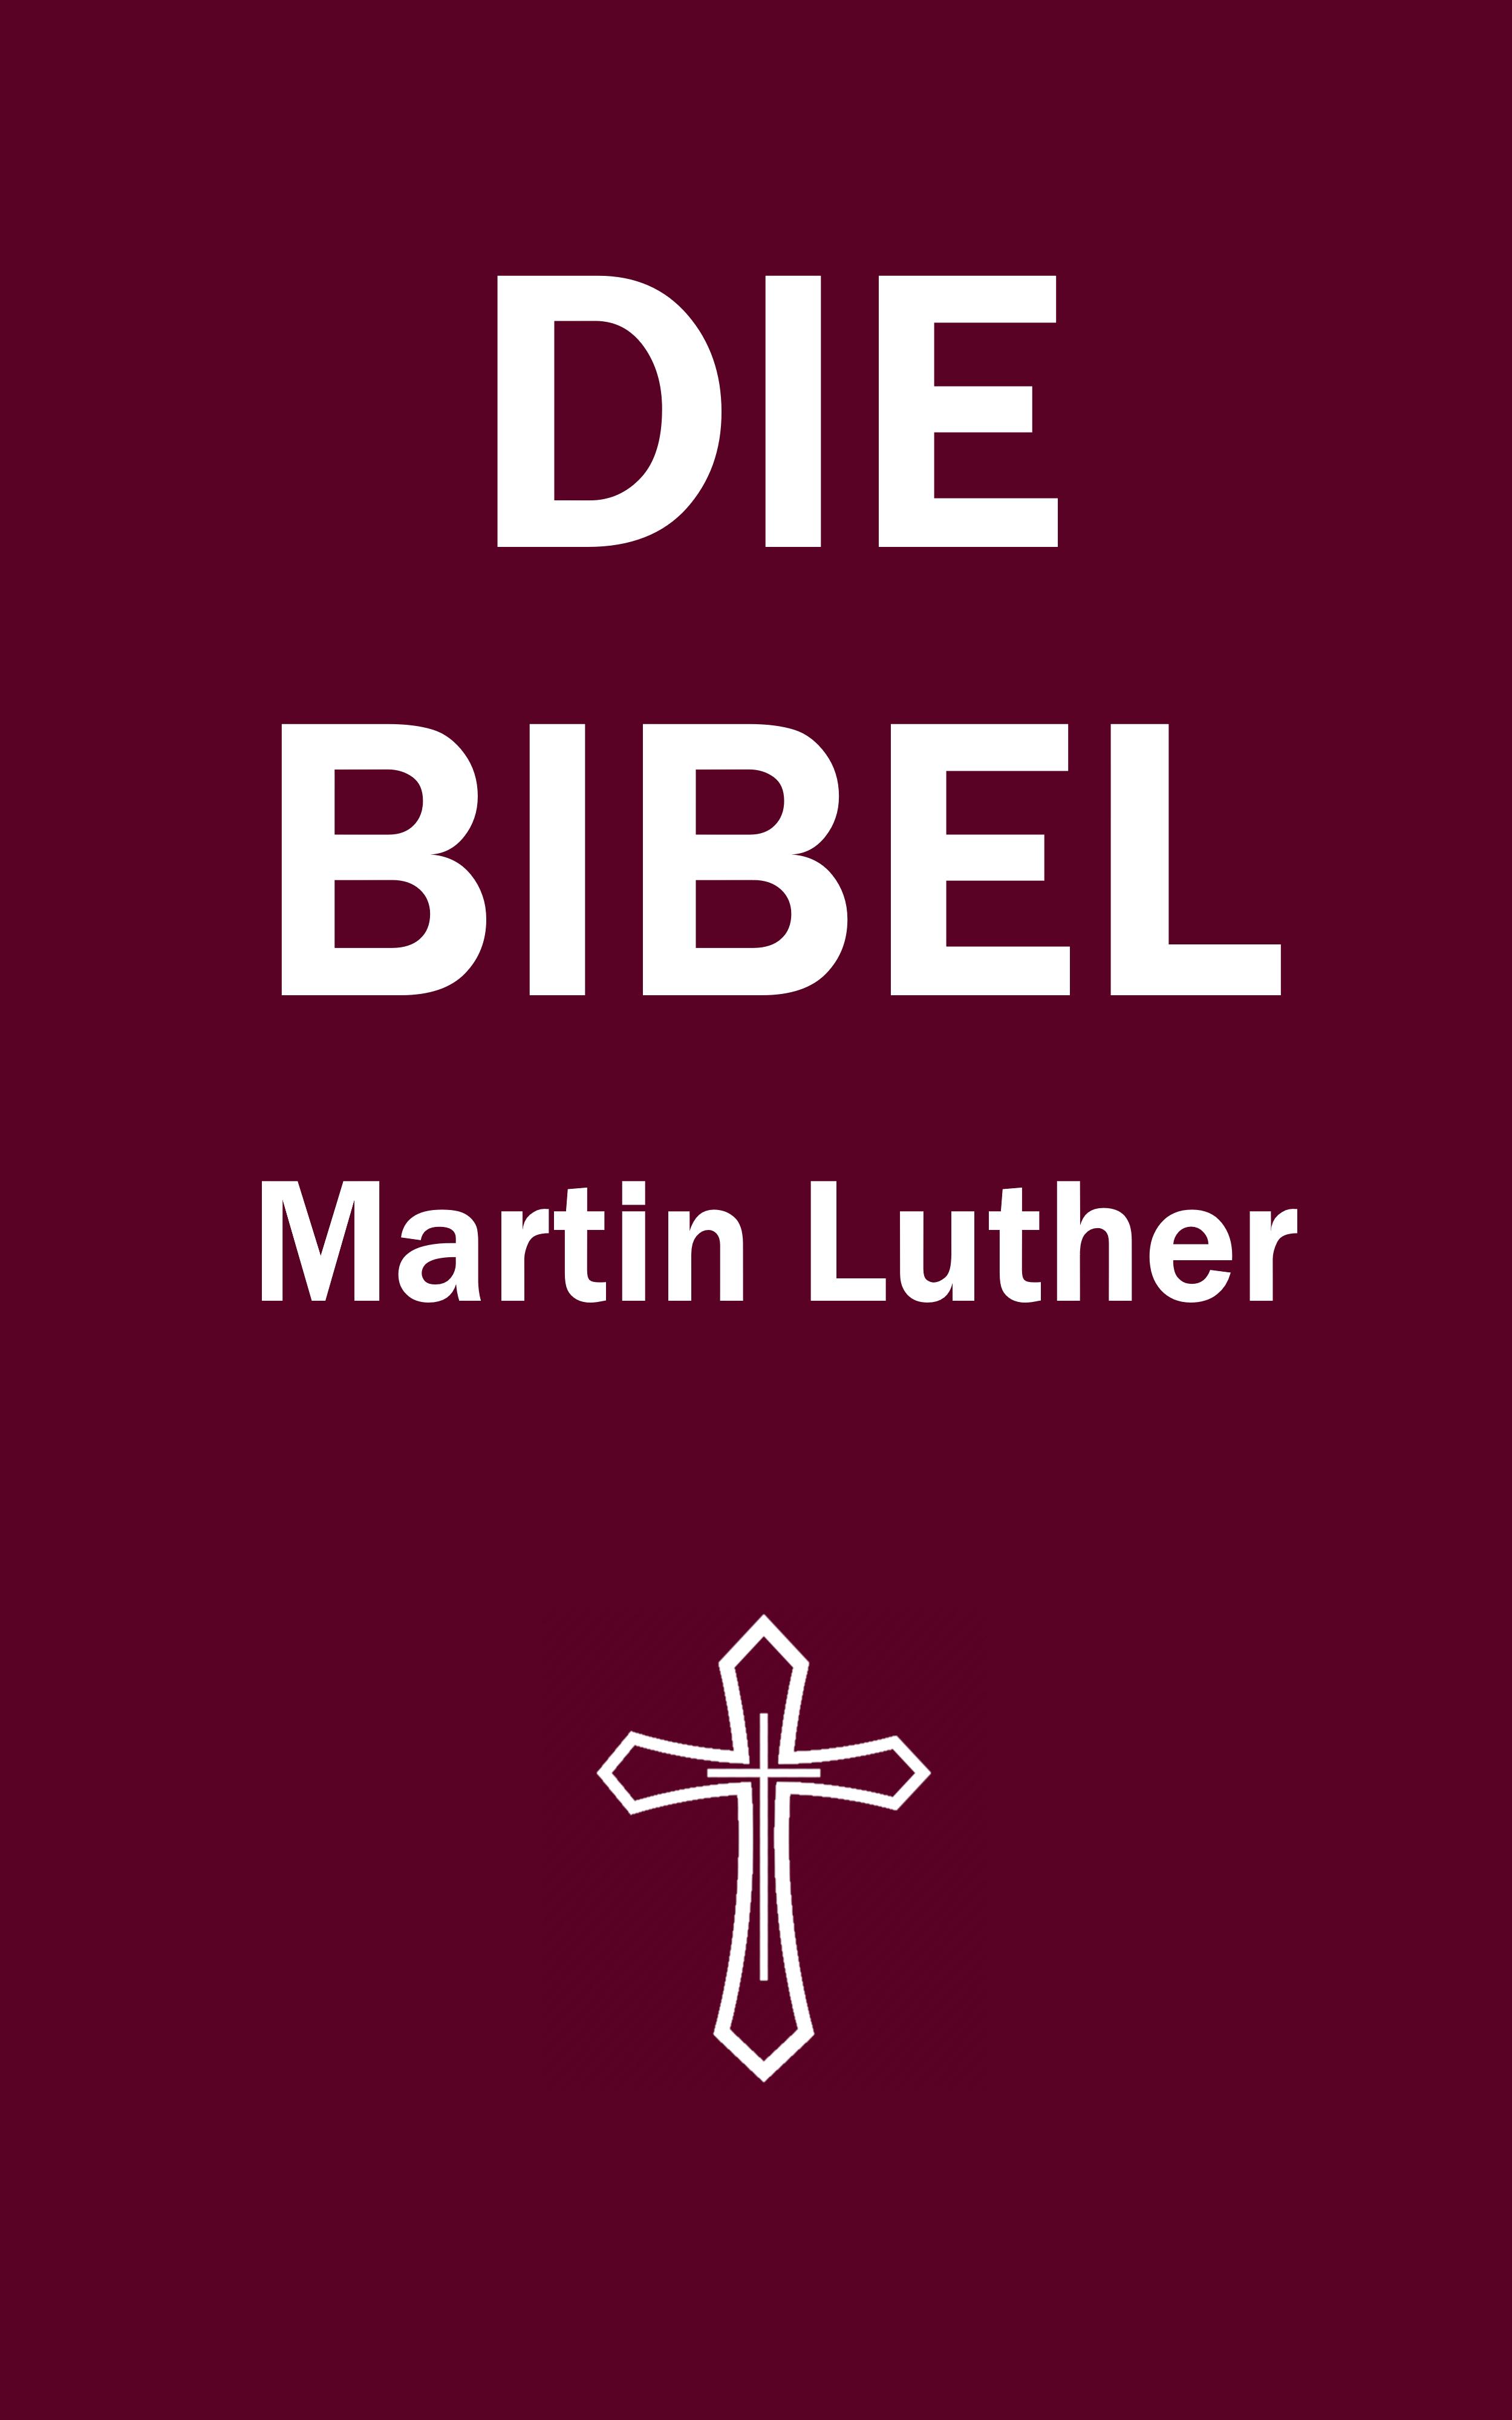 Die Bibel: Martin Luther - Martin Luther